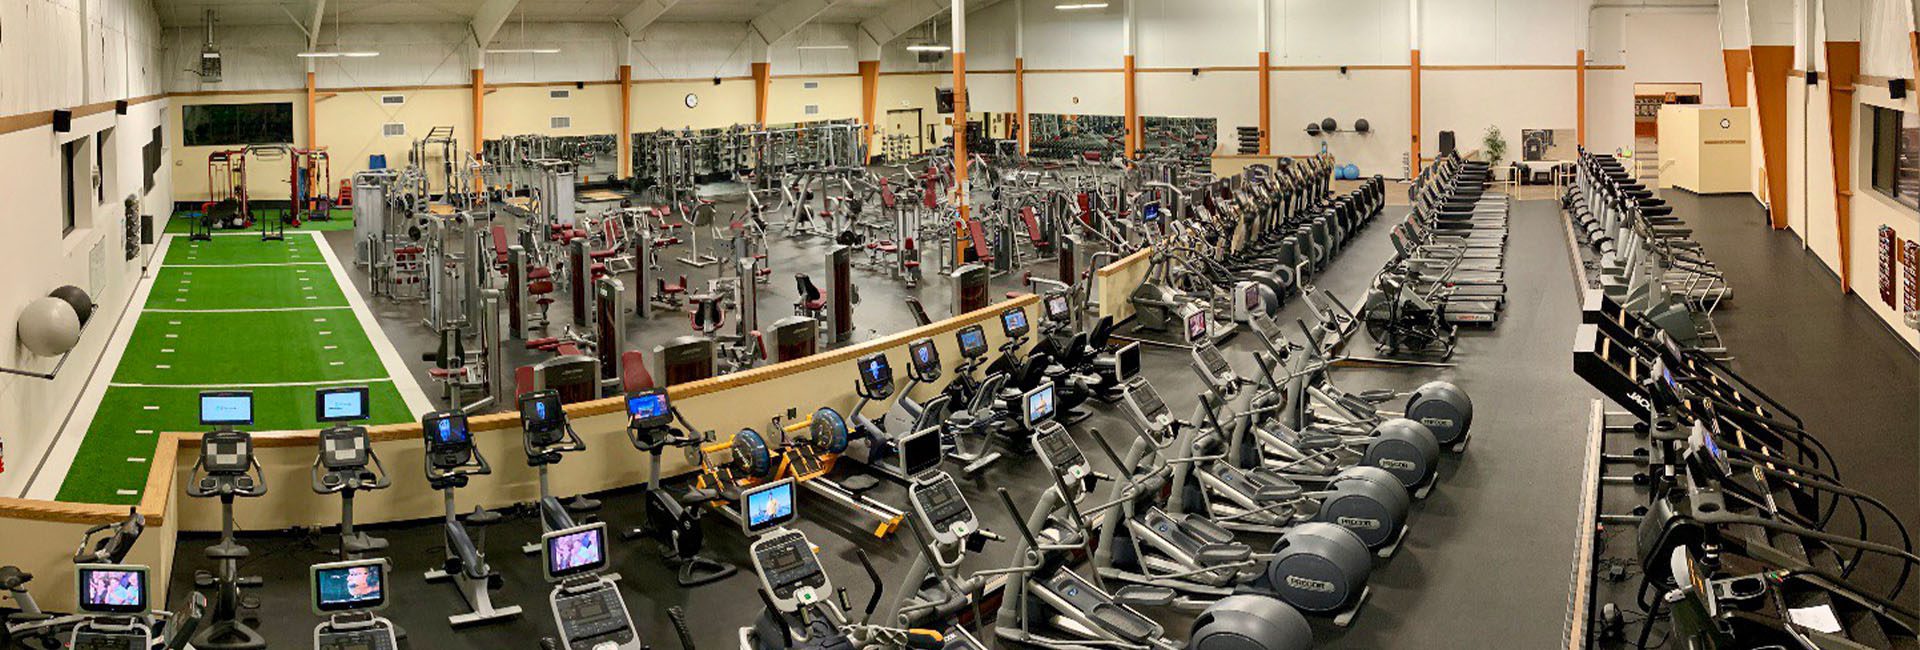 Spacious Large Gym Near Me Idaho